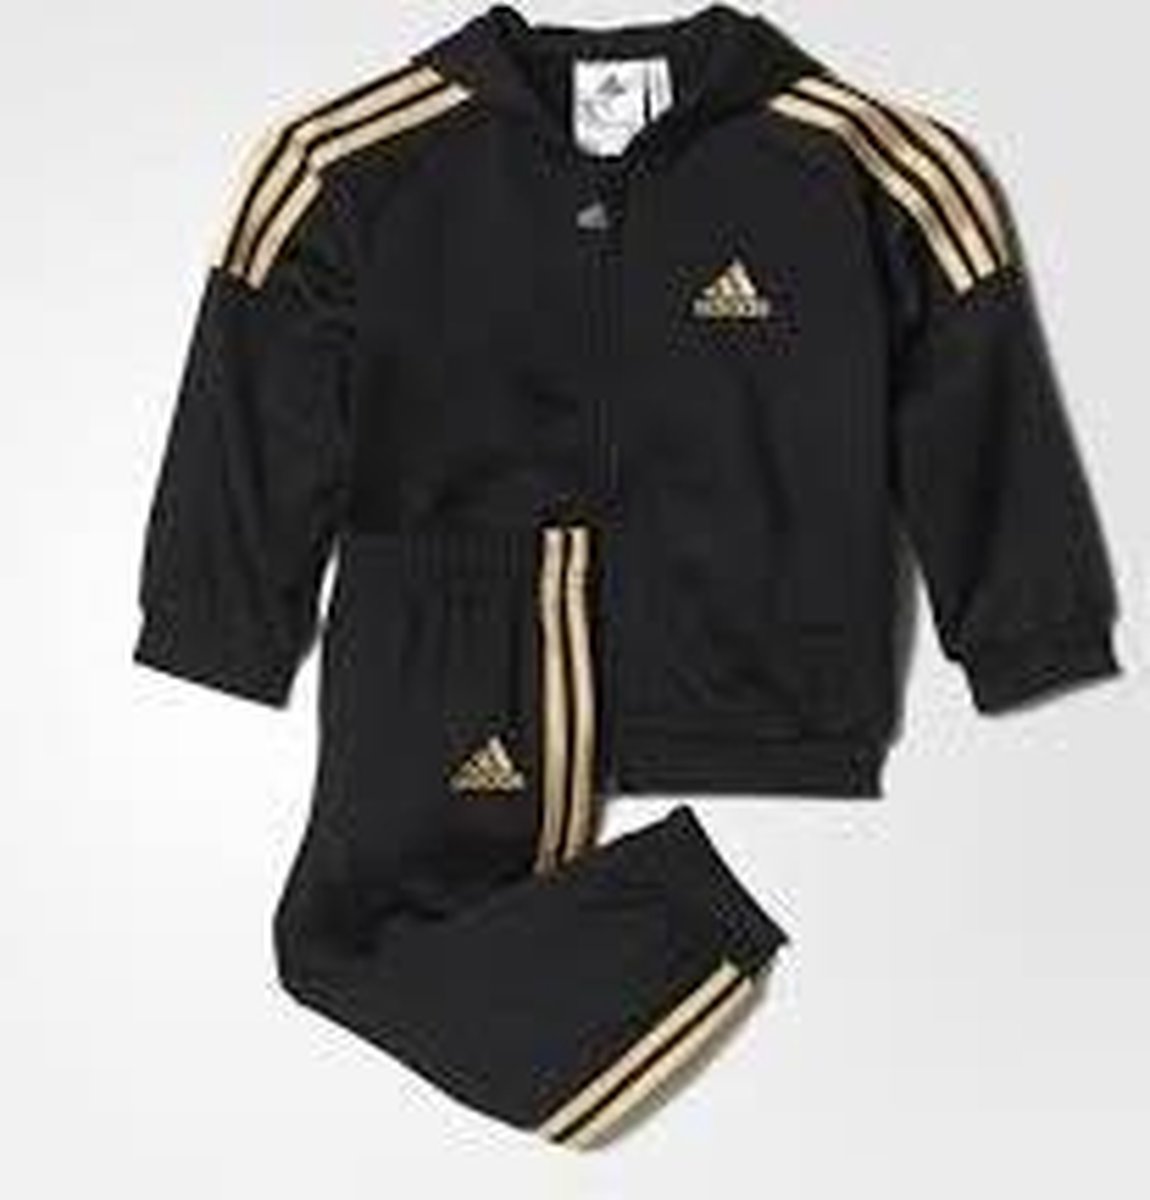 Adidas Baby Trainingspak - Black/Goud - Maat